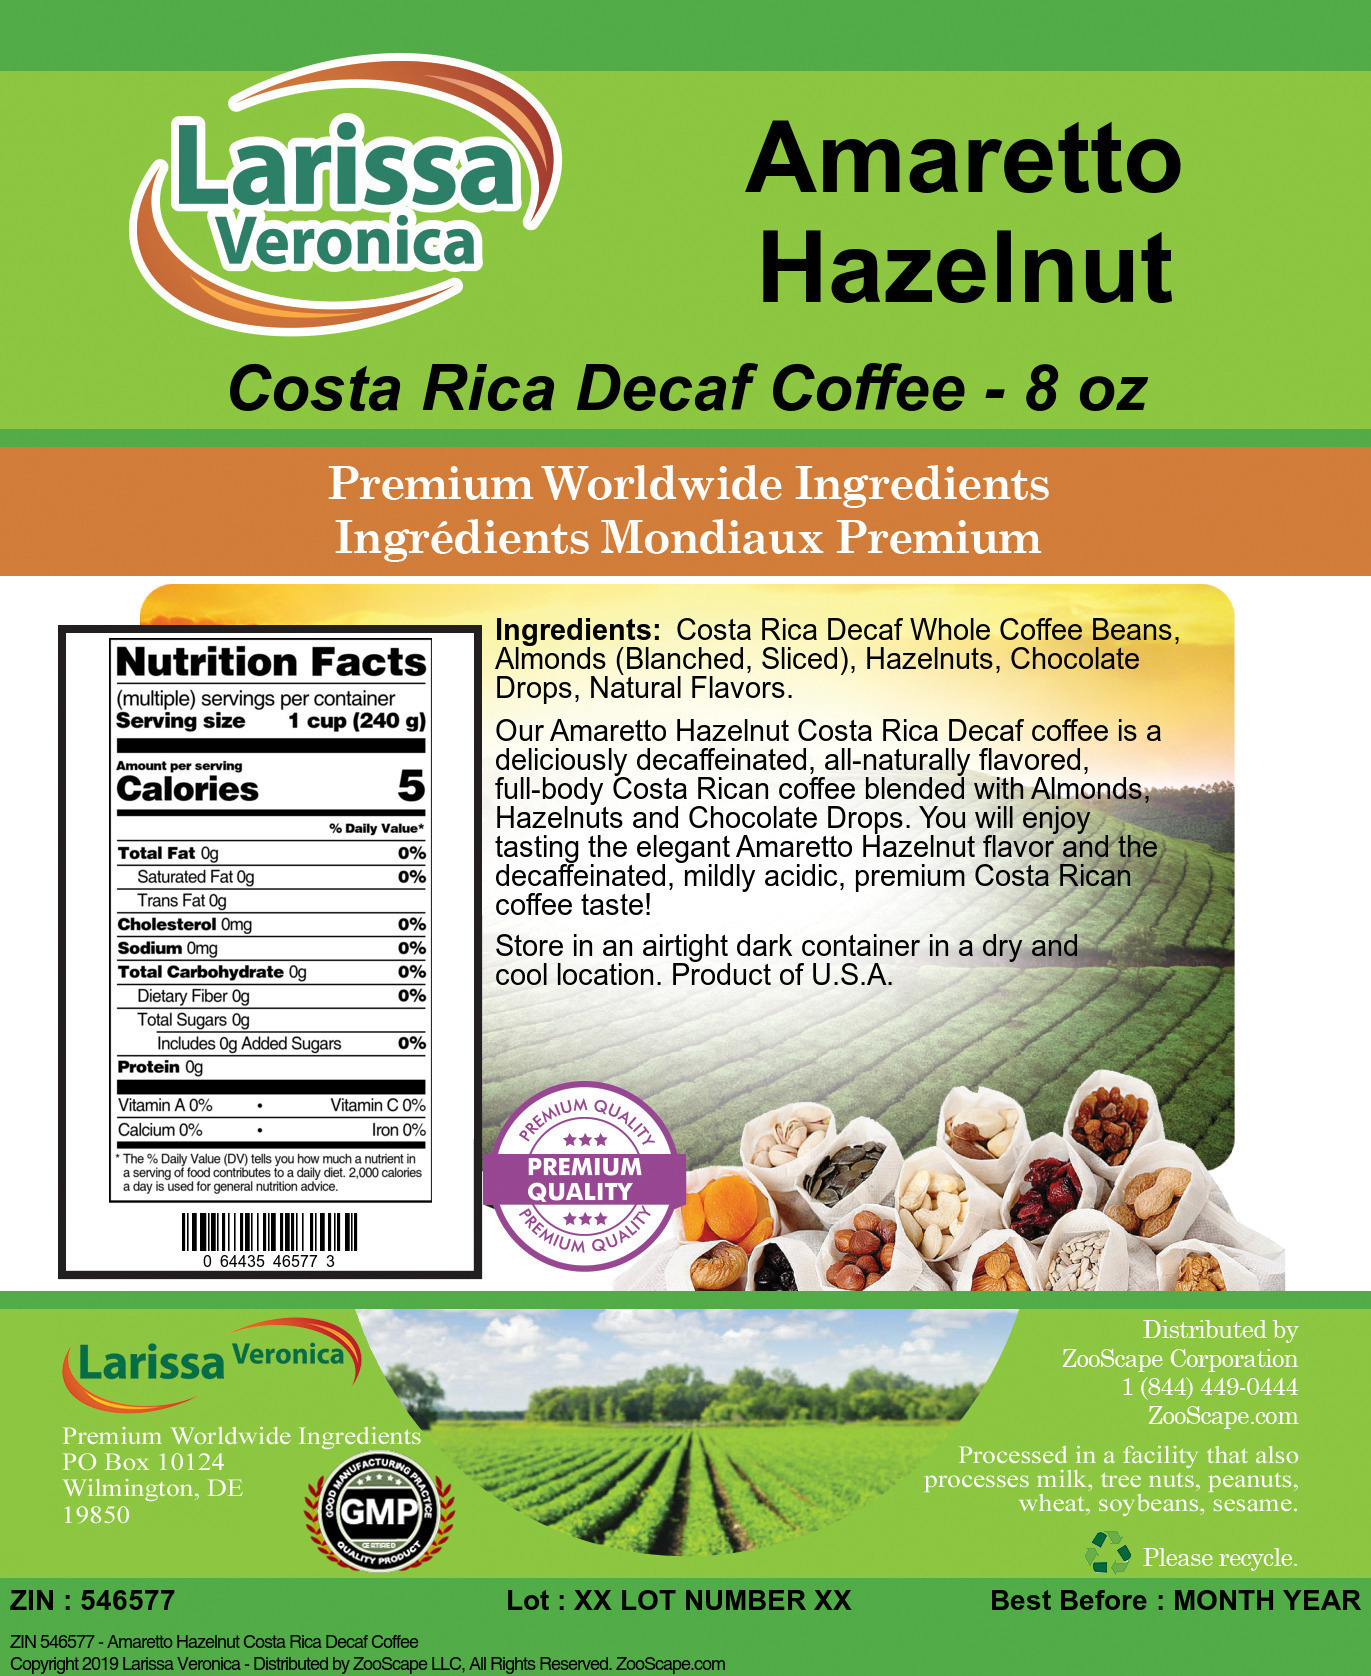 Amaretto Hazelnut Costa Rica Decaf Coffee - Label